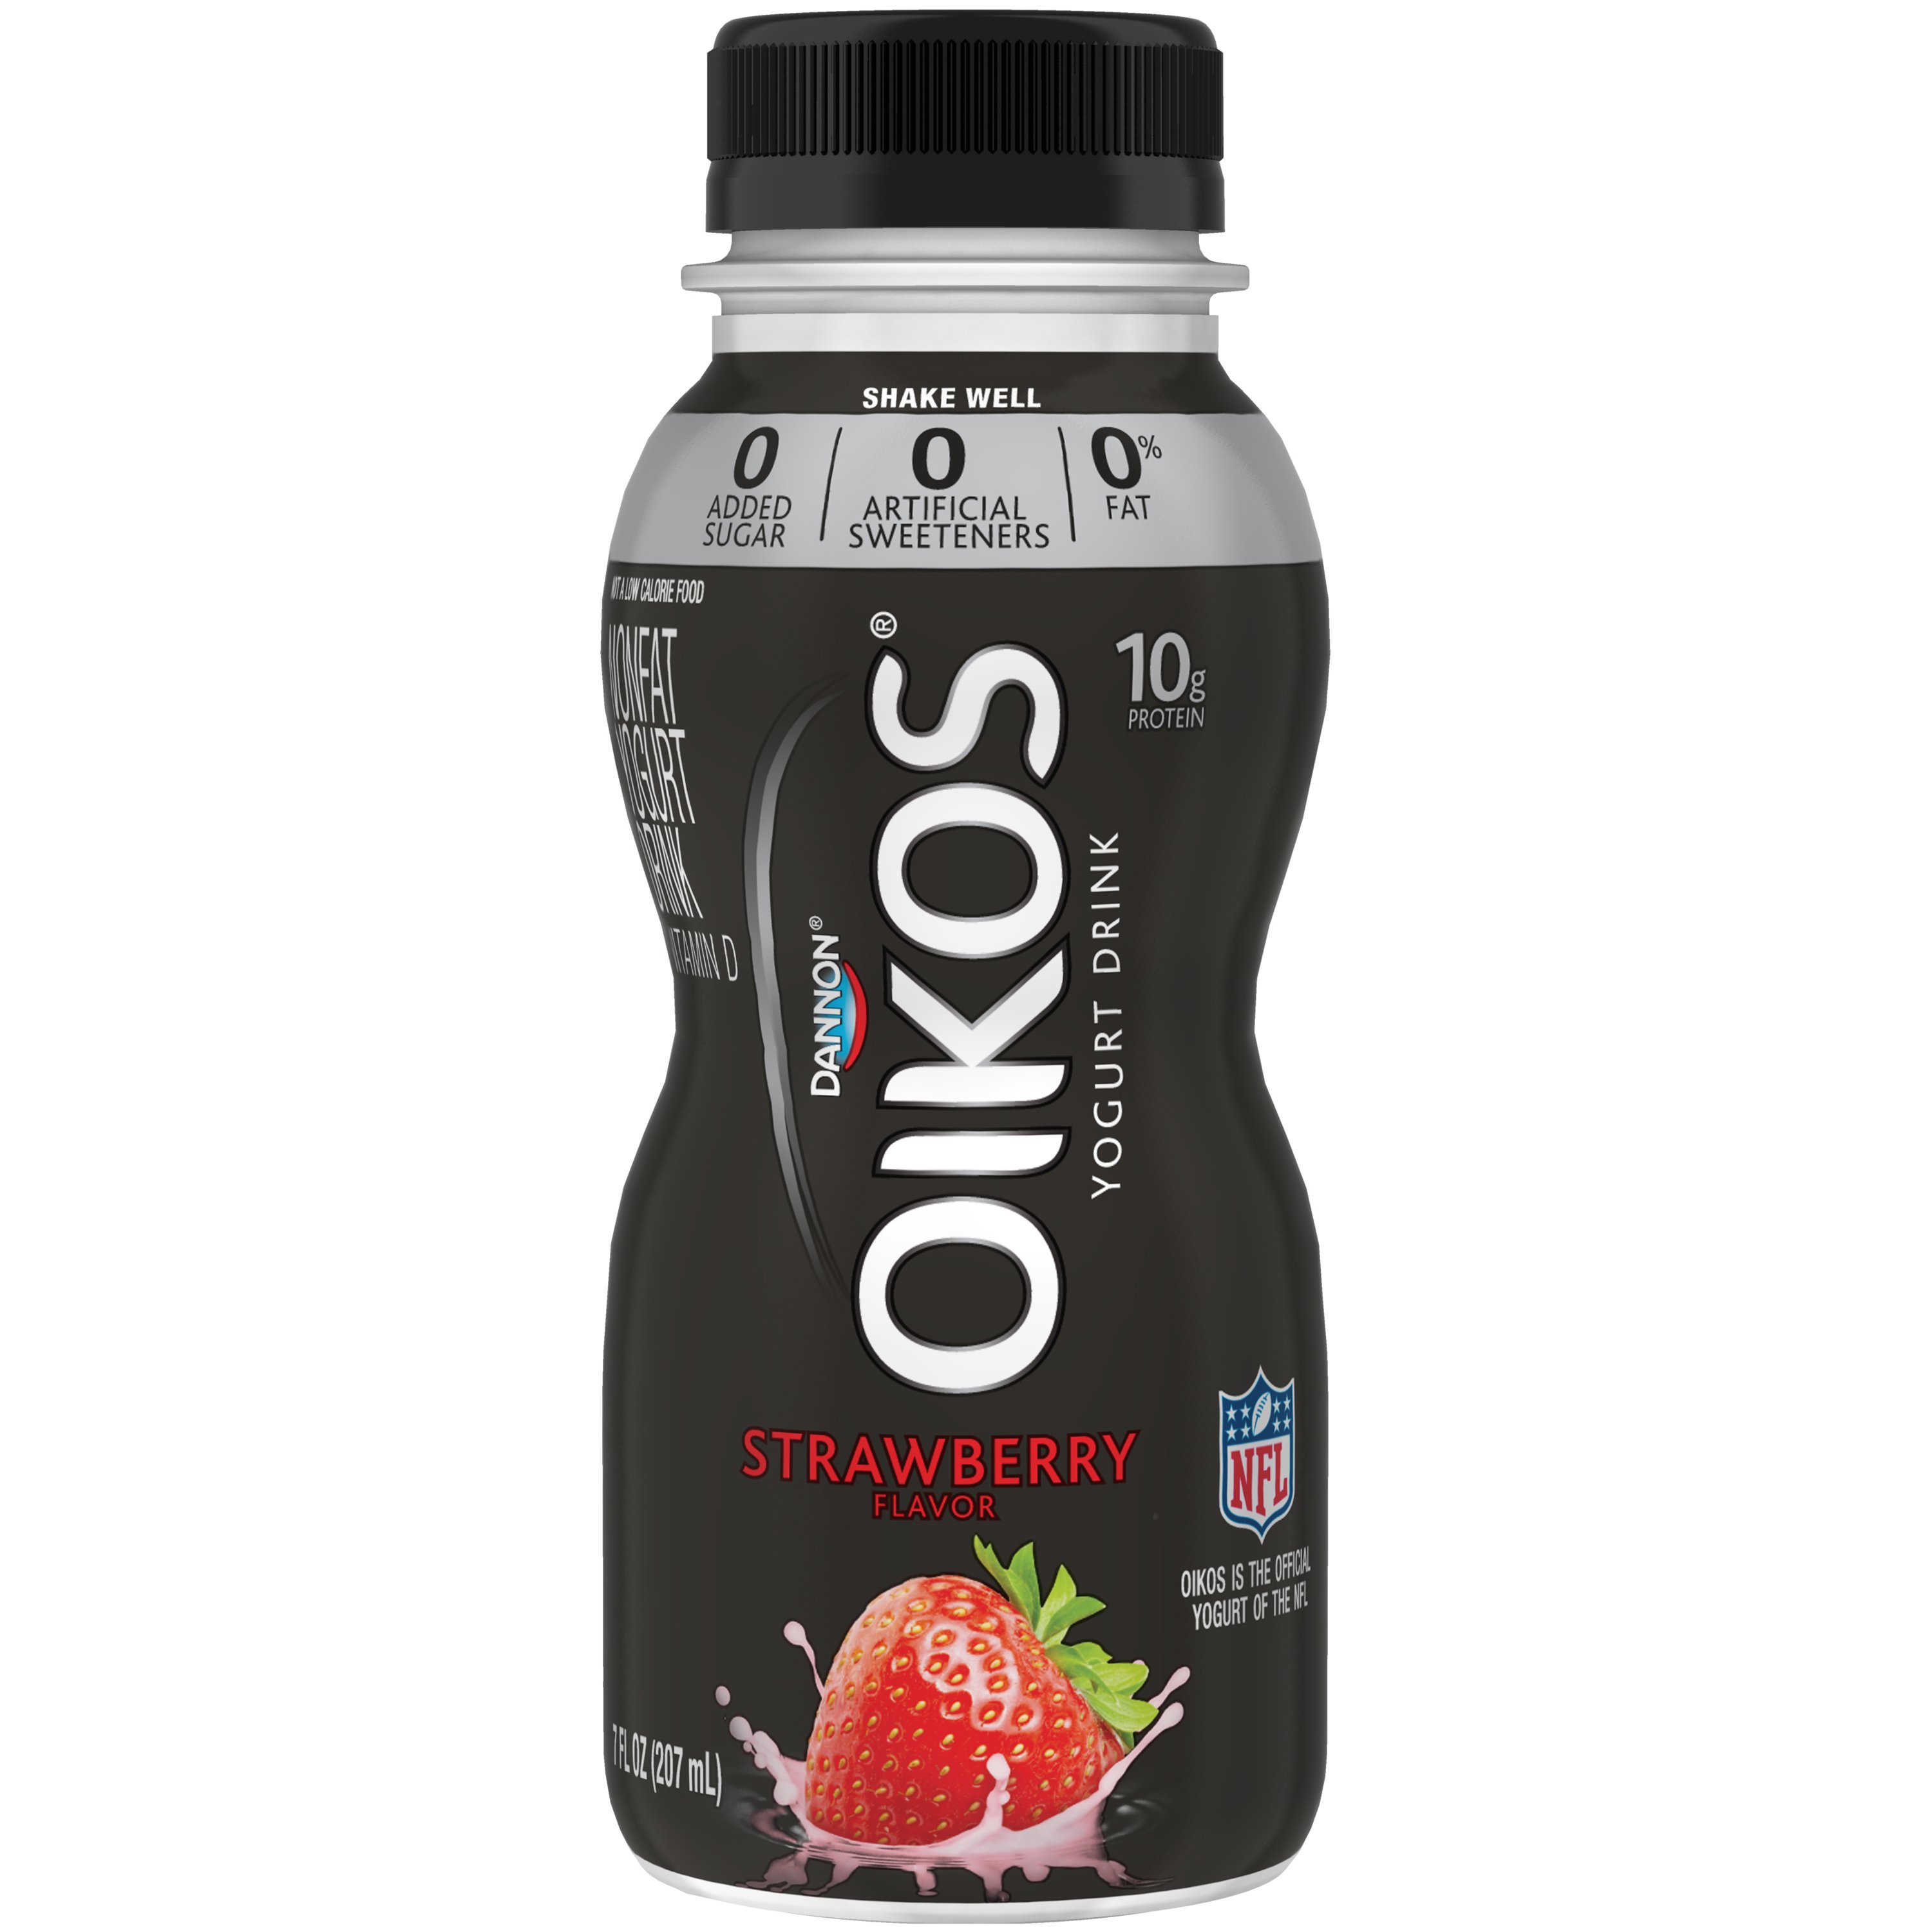 Dannon Oikos Non-Fat Strawberry Yogurt Drink - Shop Yogurt at H-E-B